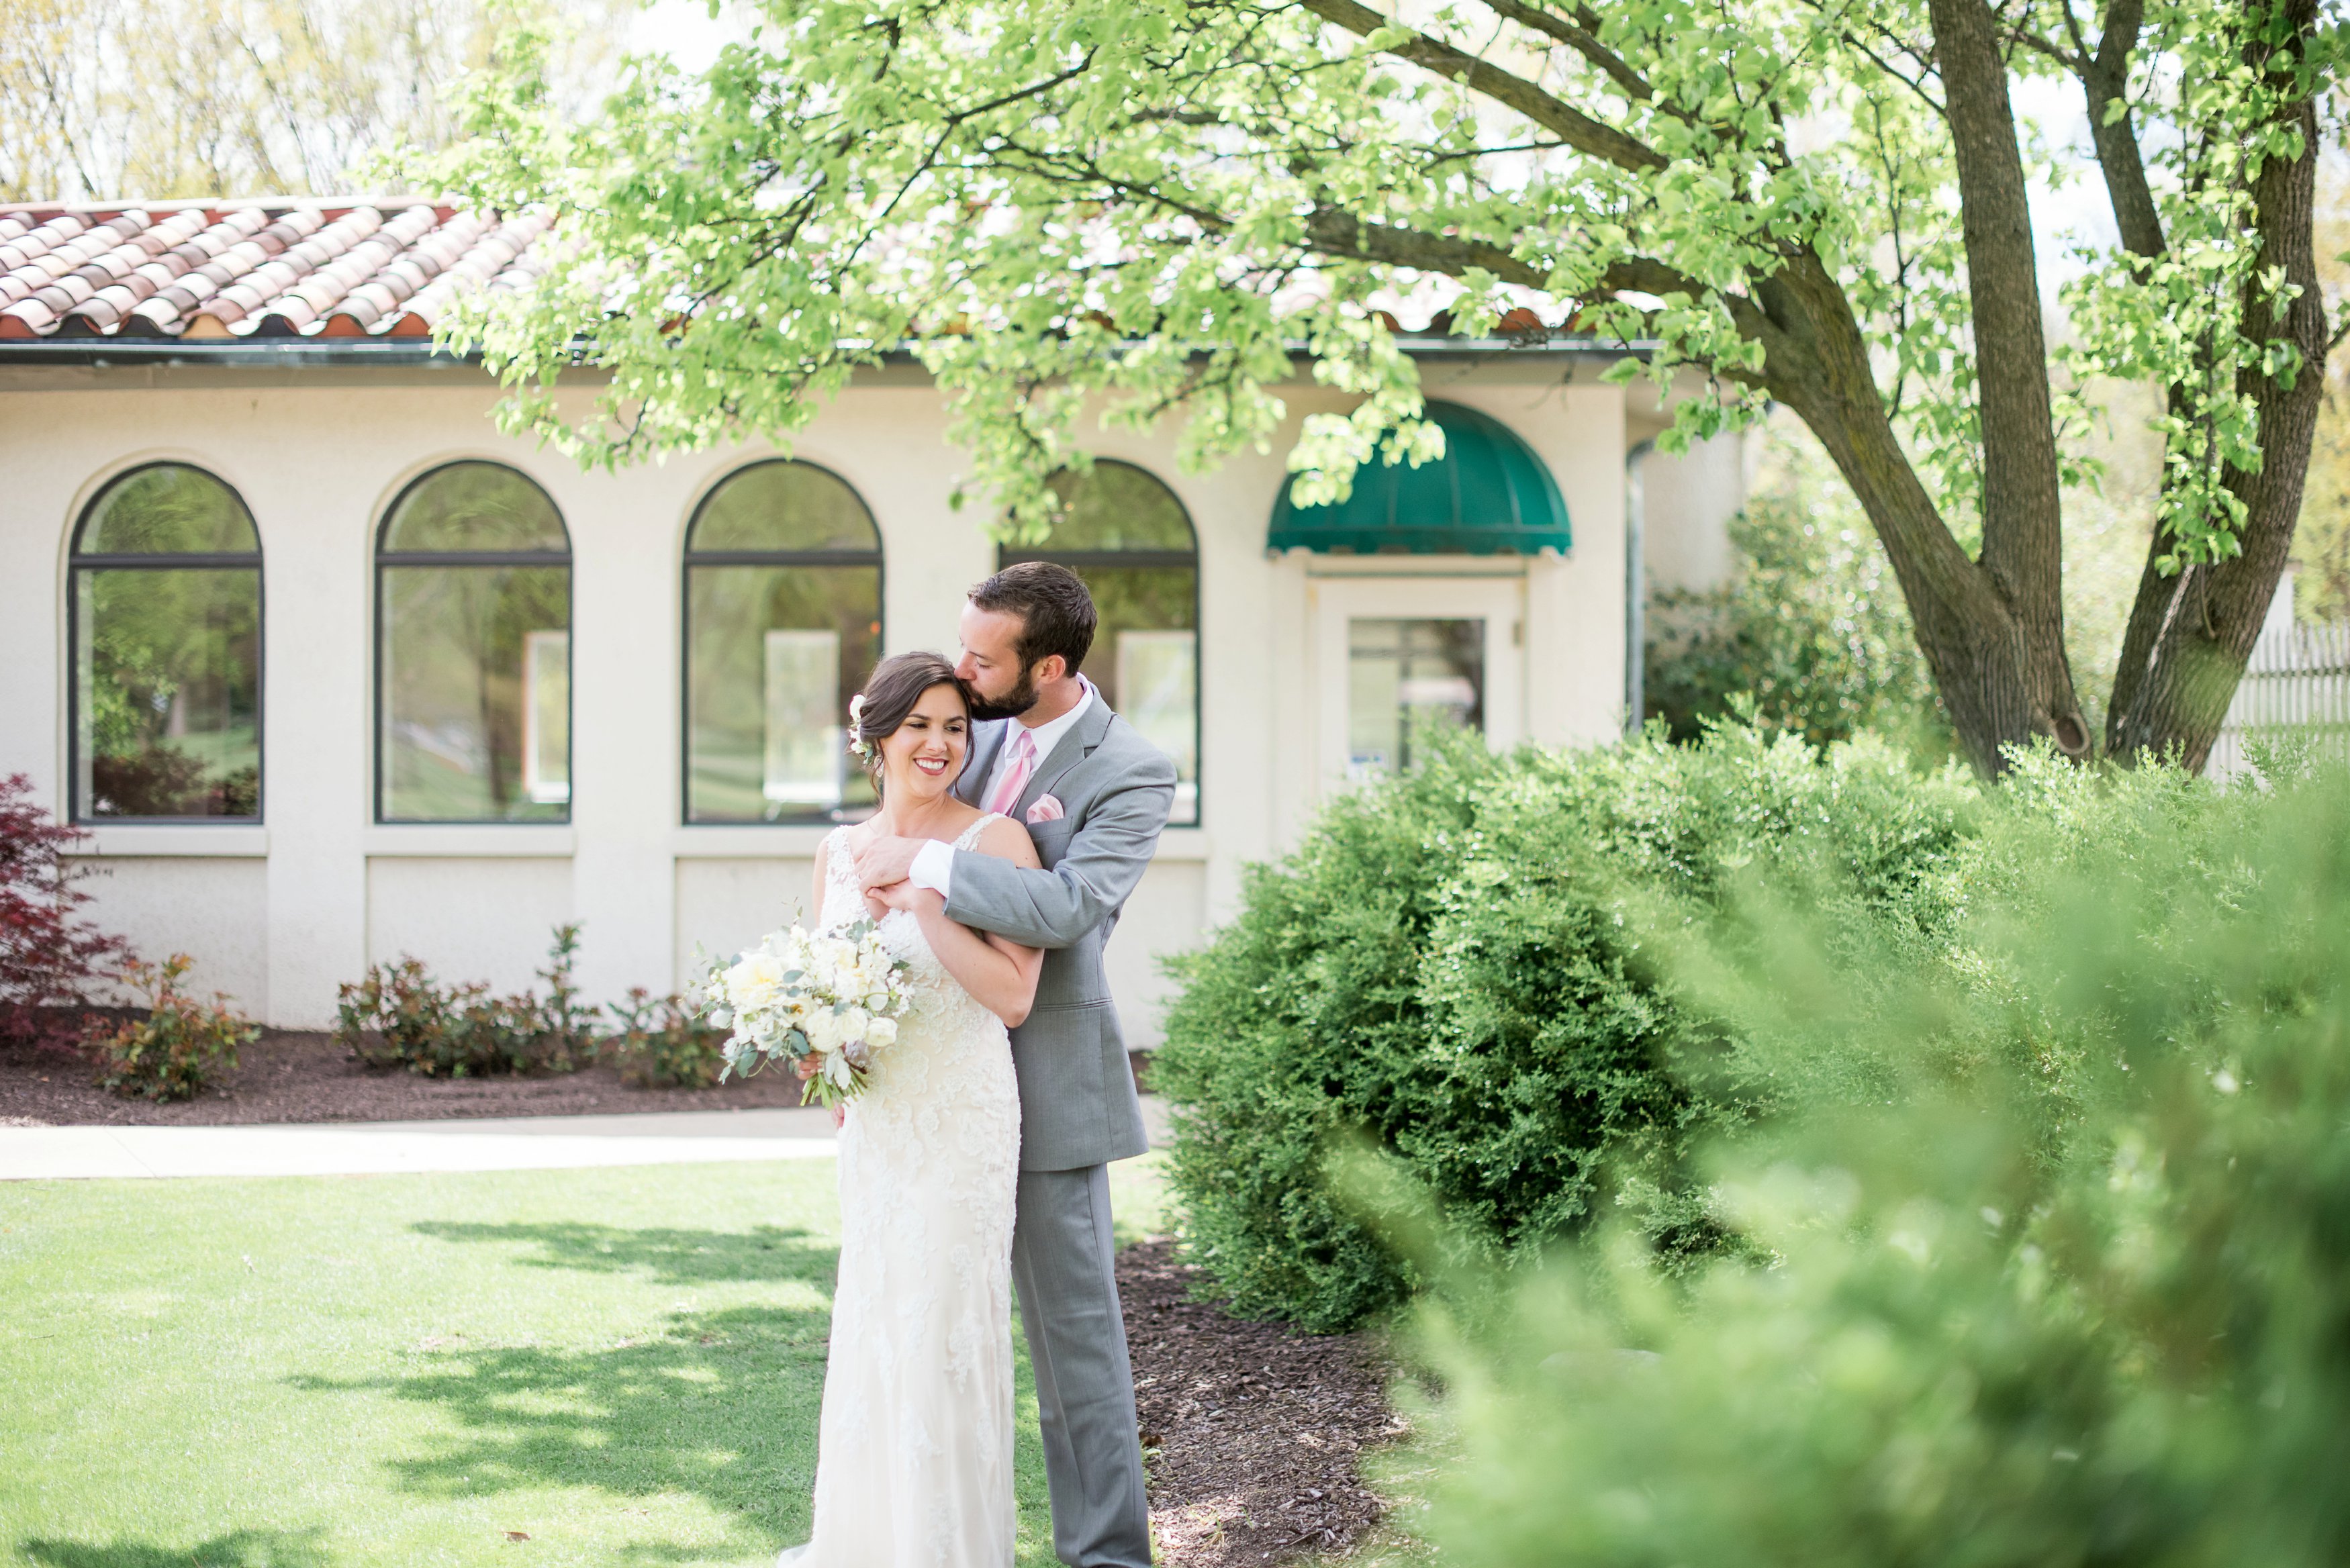 Sarah & Rachel | Wedding Photographers, Pale blue, blush, and white wedding | Hillcrest country club | Indianapolis, Indiana